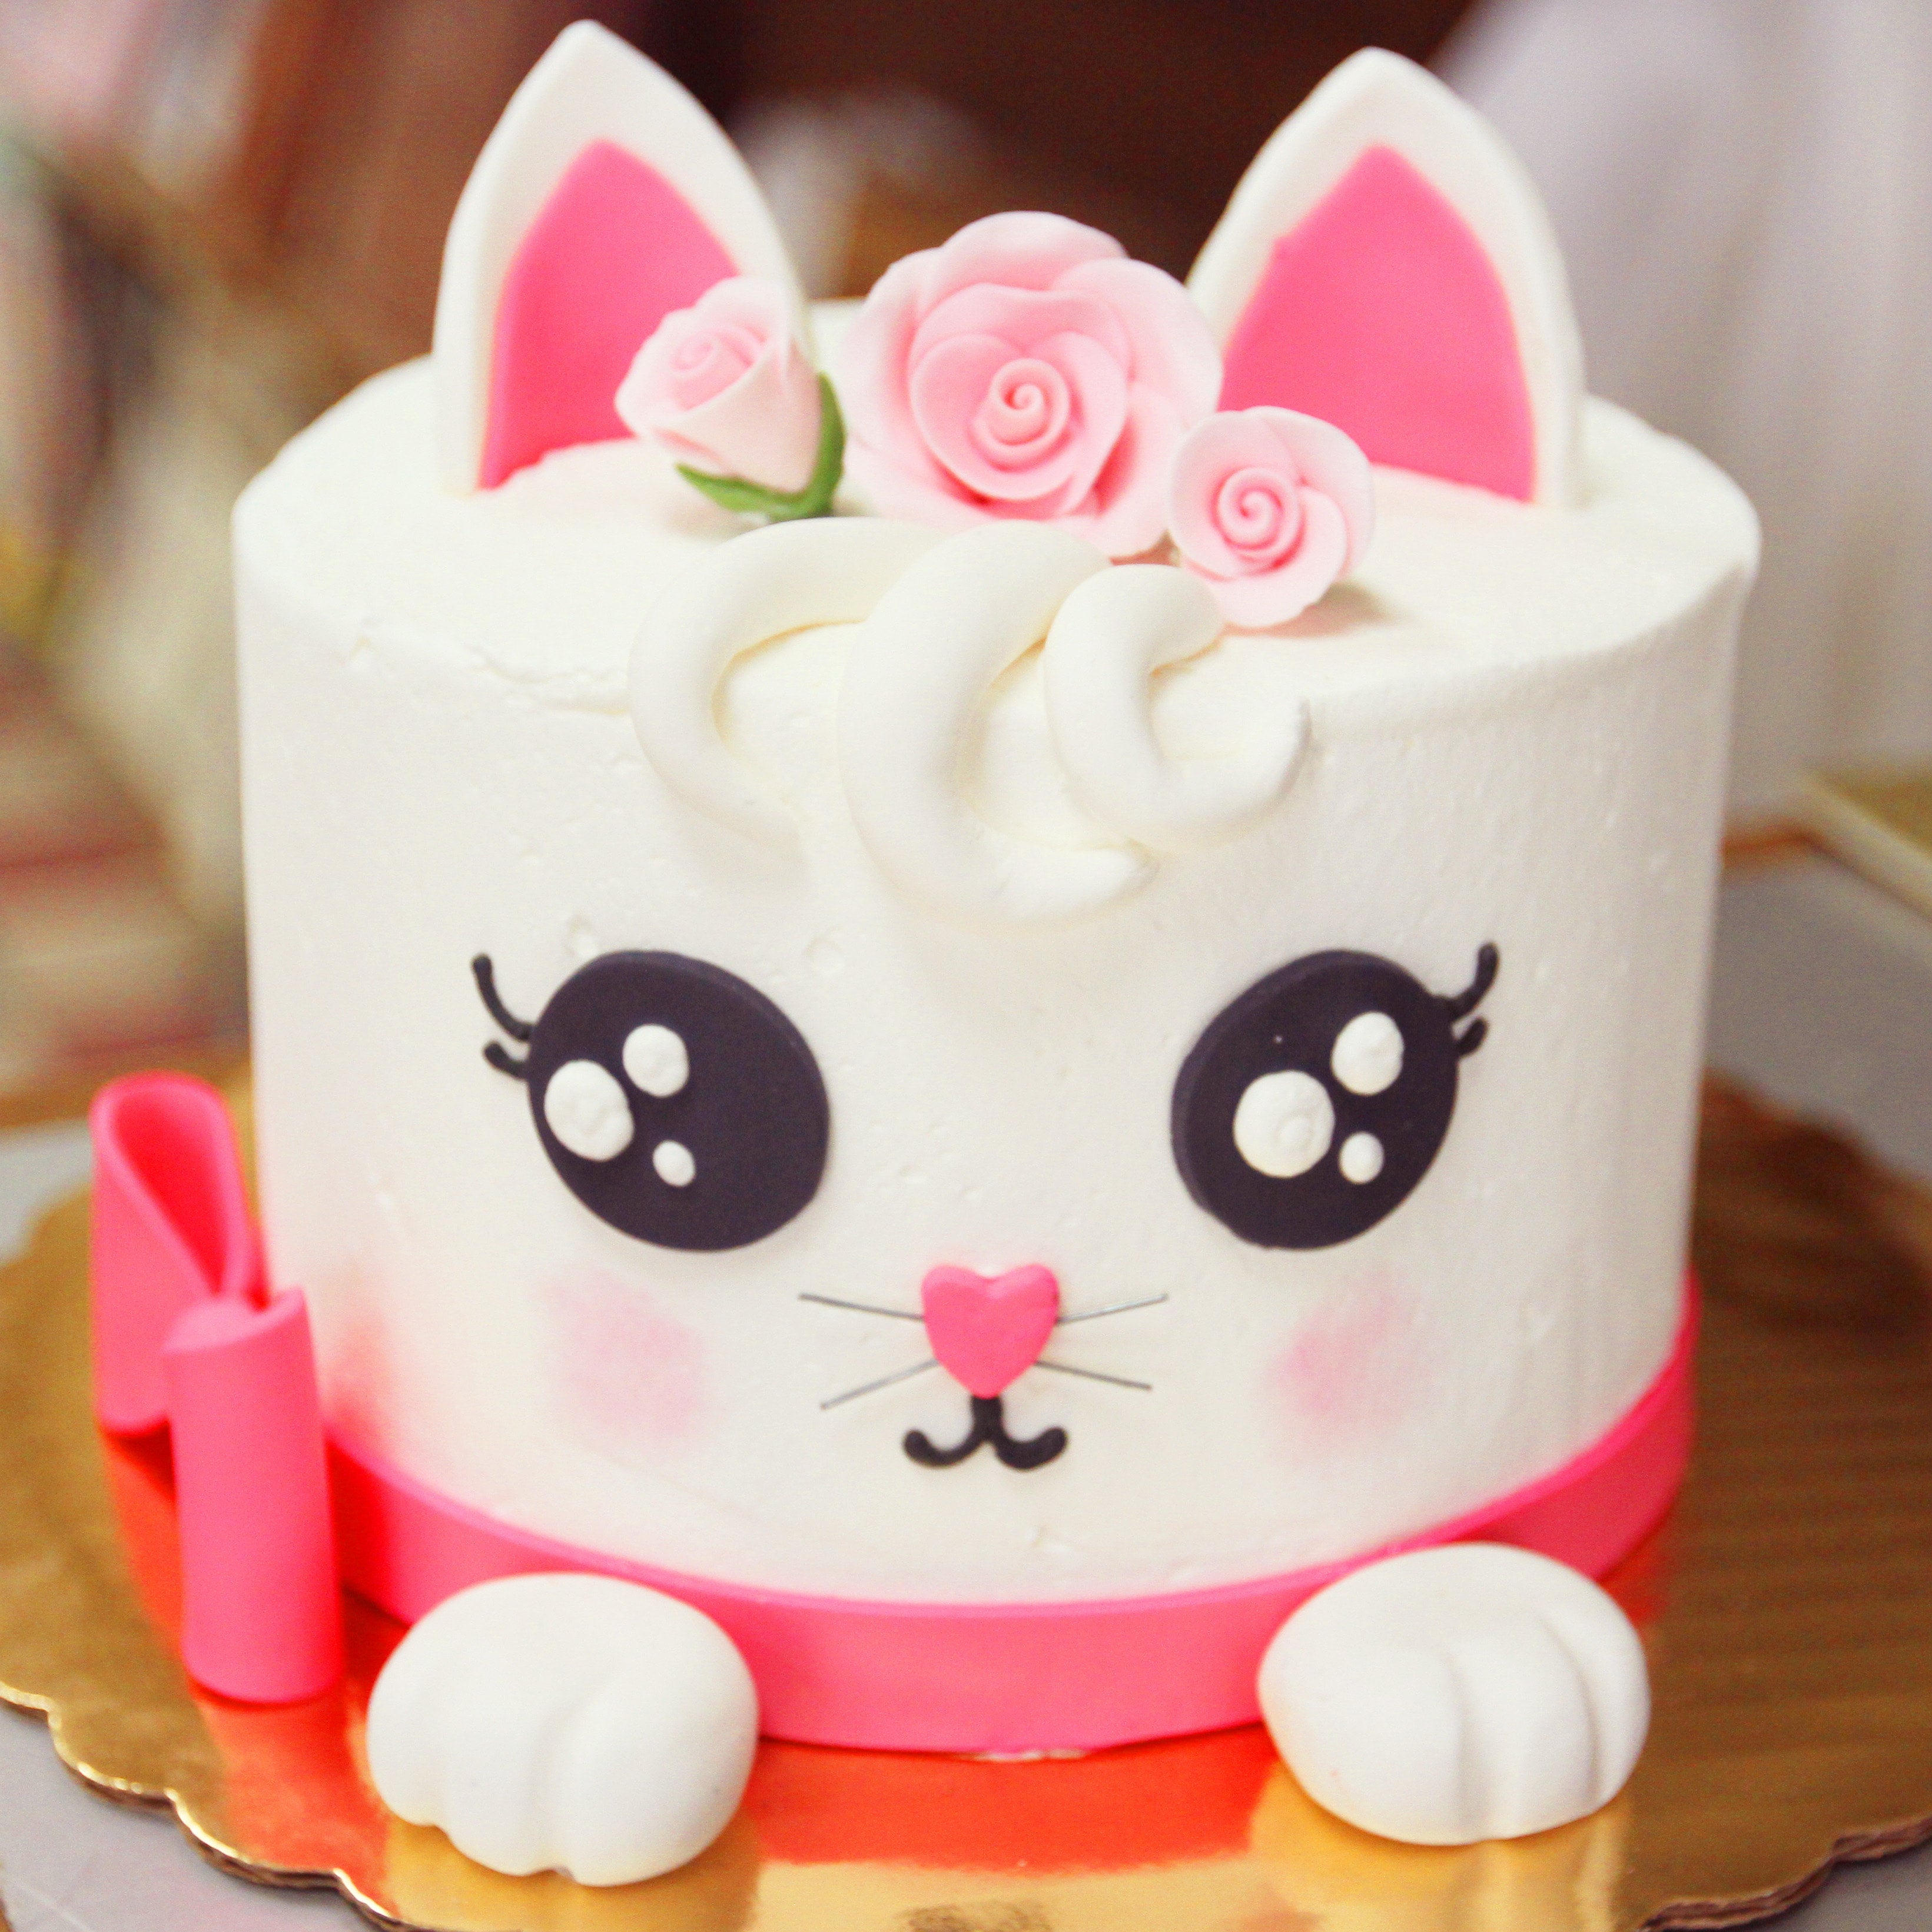 Cute cats cake - Cakey Goodness